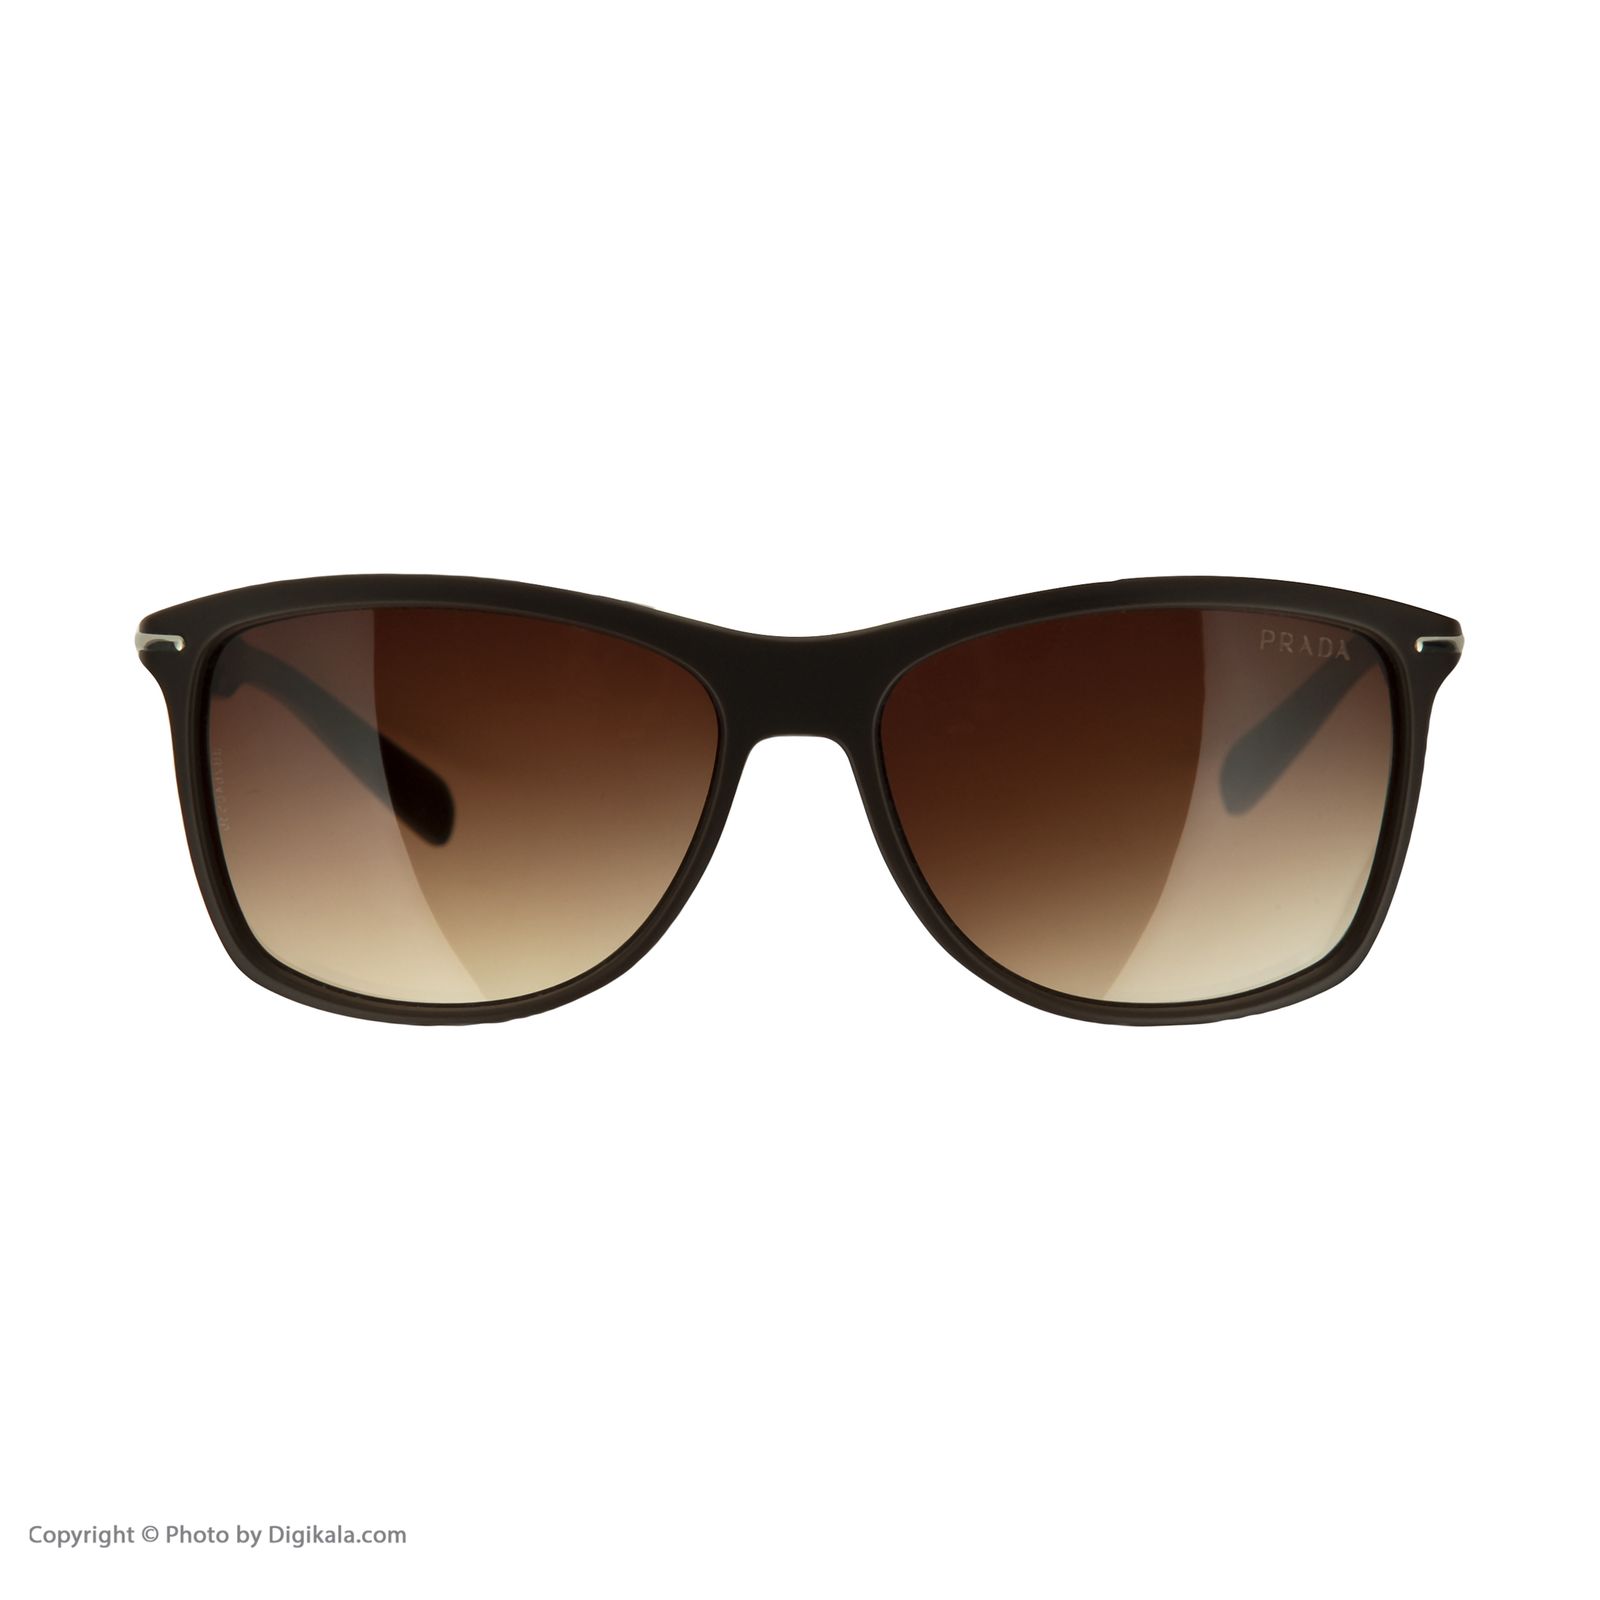  عینک آفتابی پرادا مدل 100 -  - 5